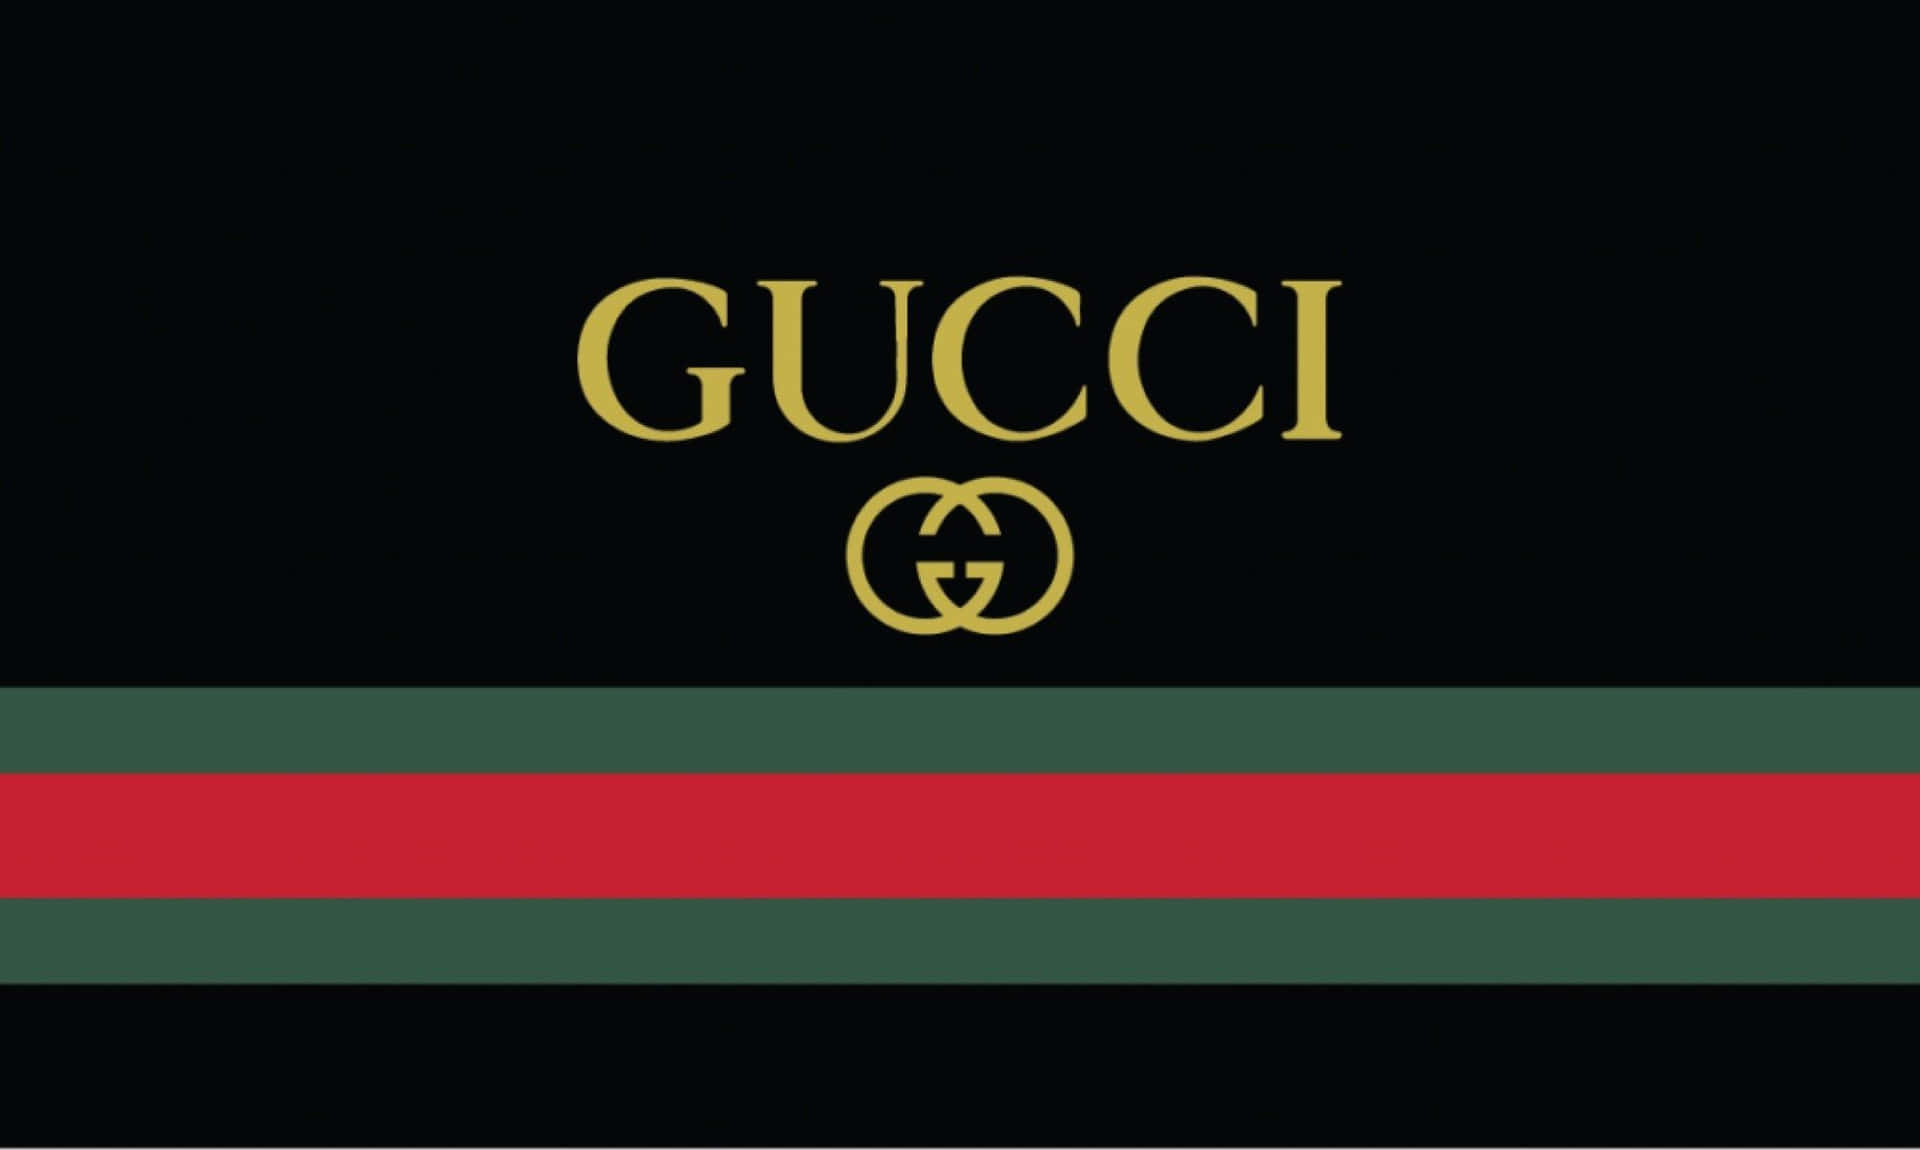 Gucci Green, a Bright Flash of Color Wallpaper